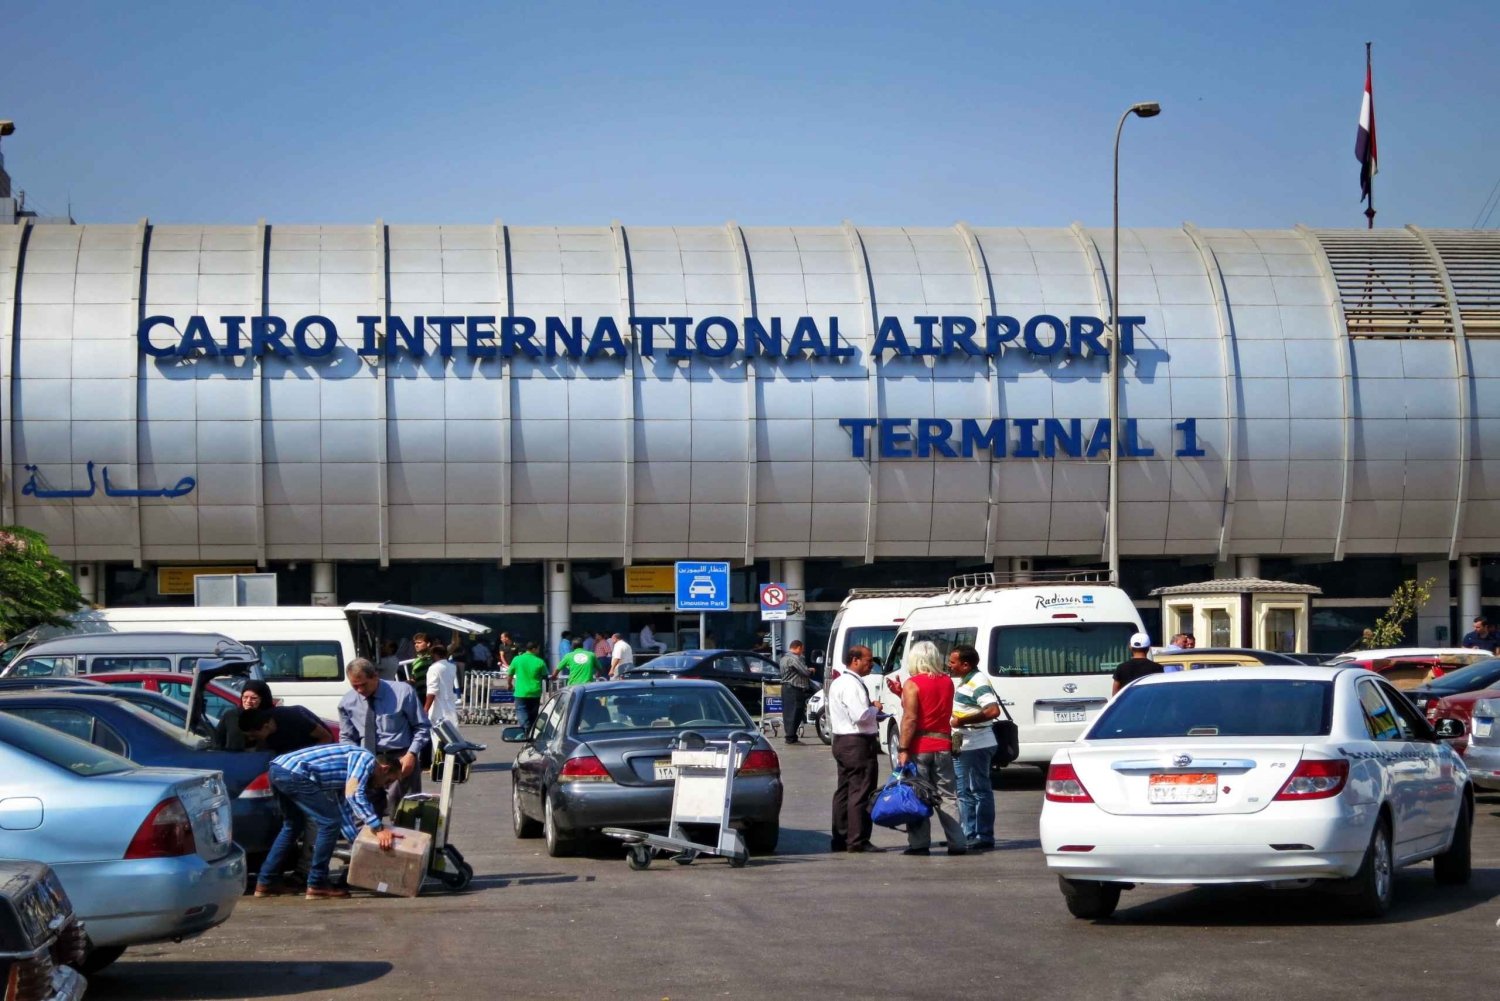 Cairo Airport: Arrival & Departure Private Transfer